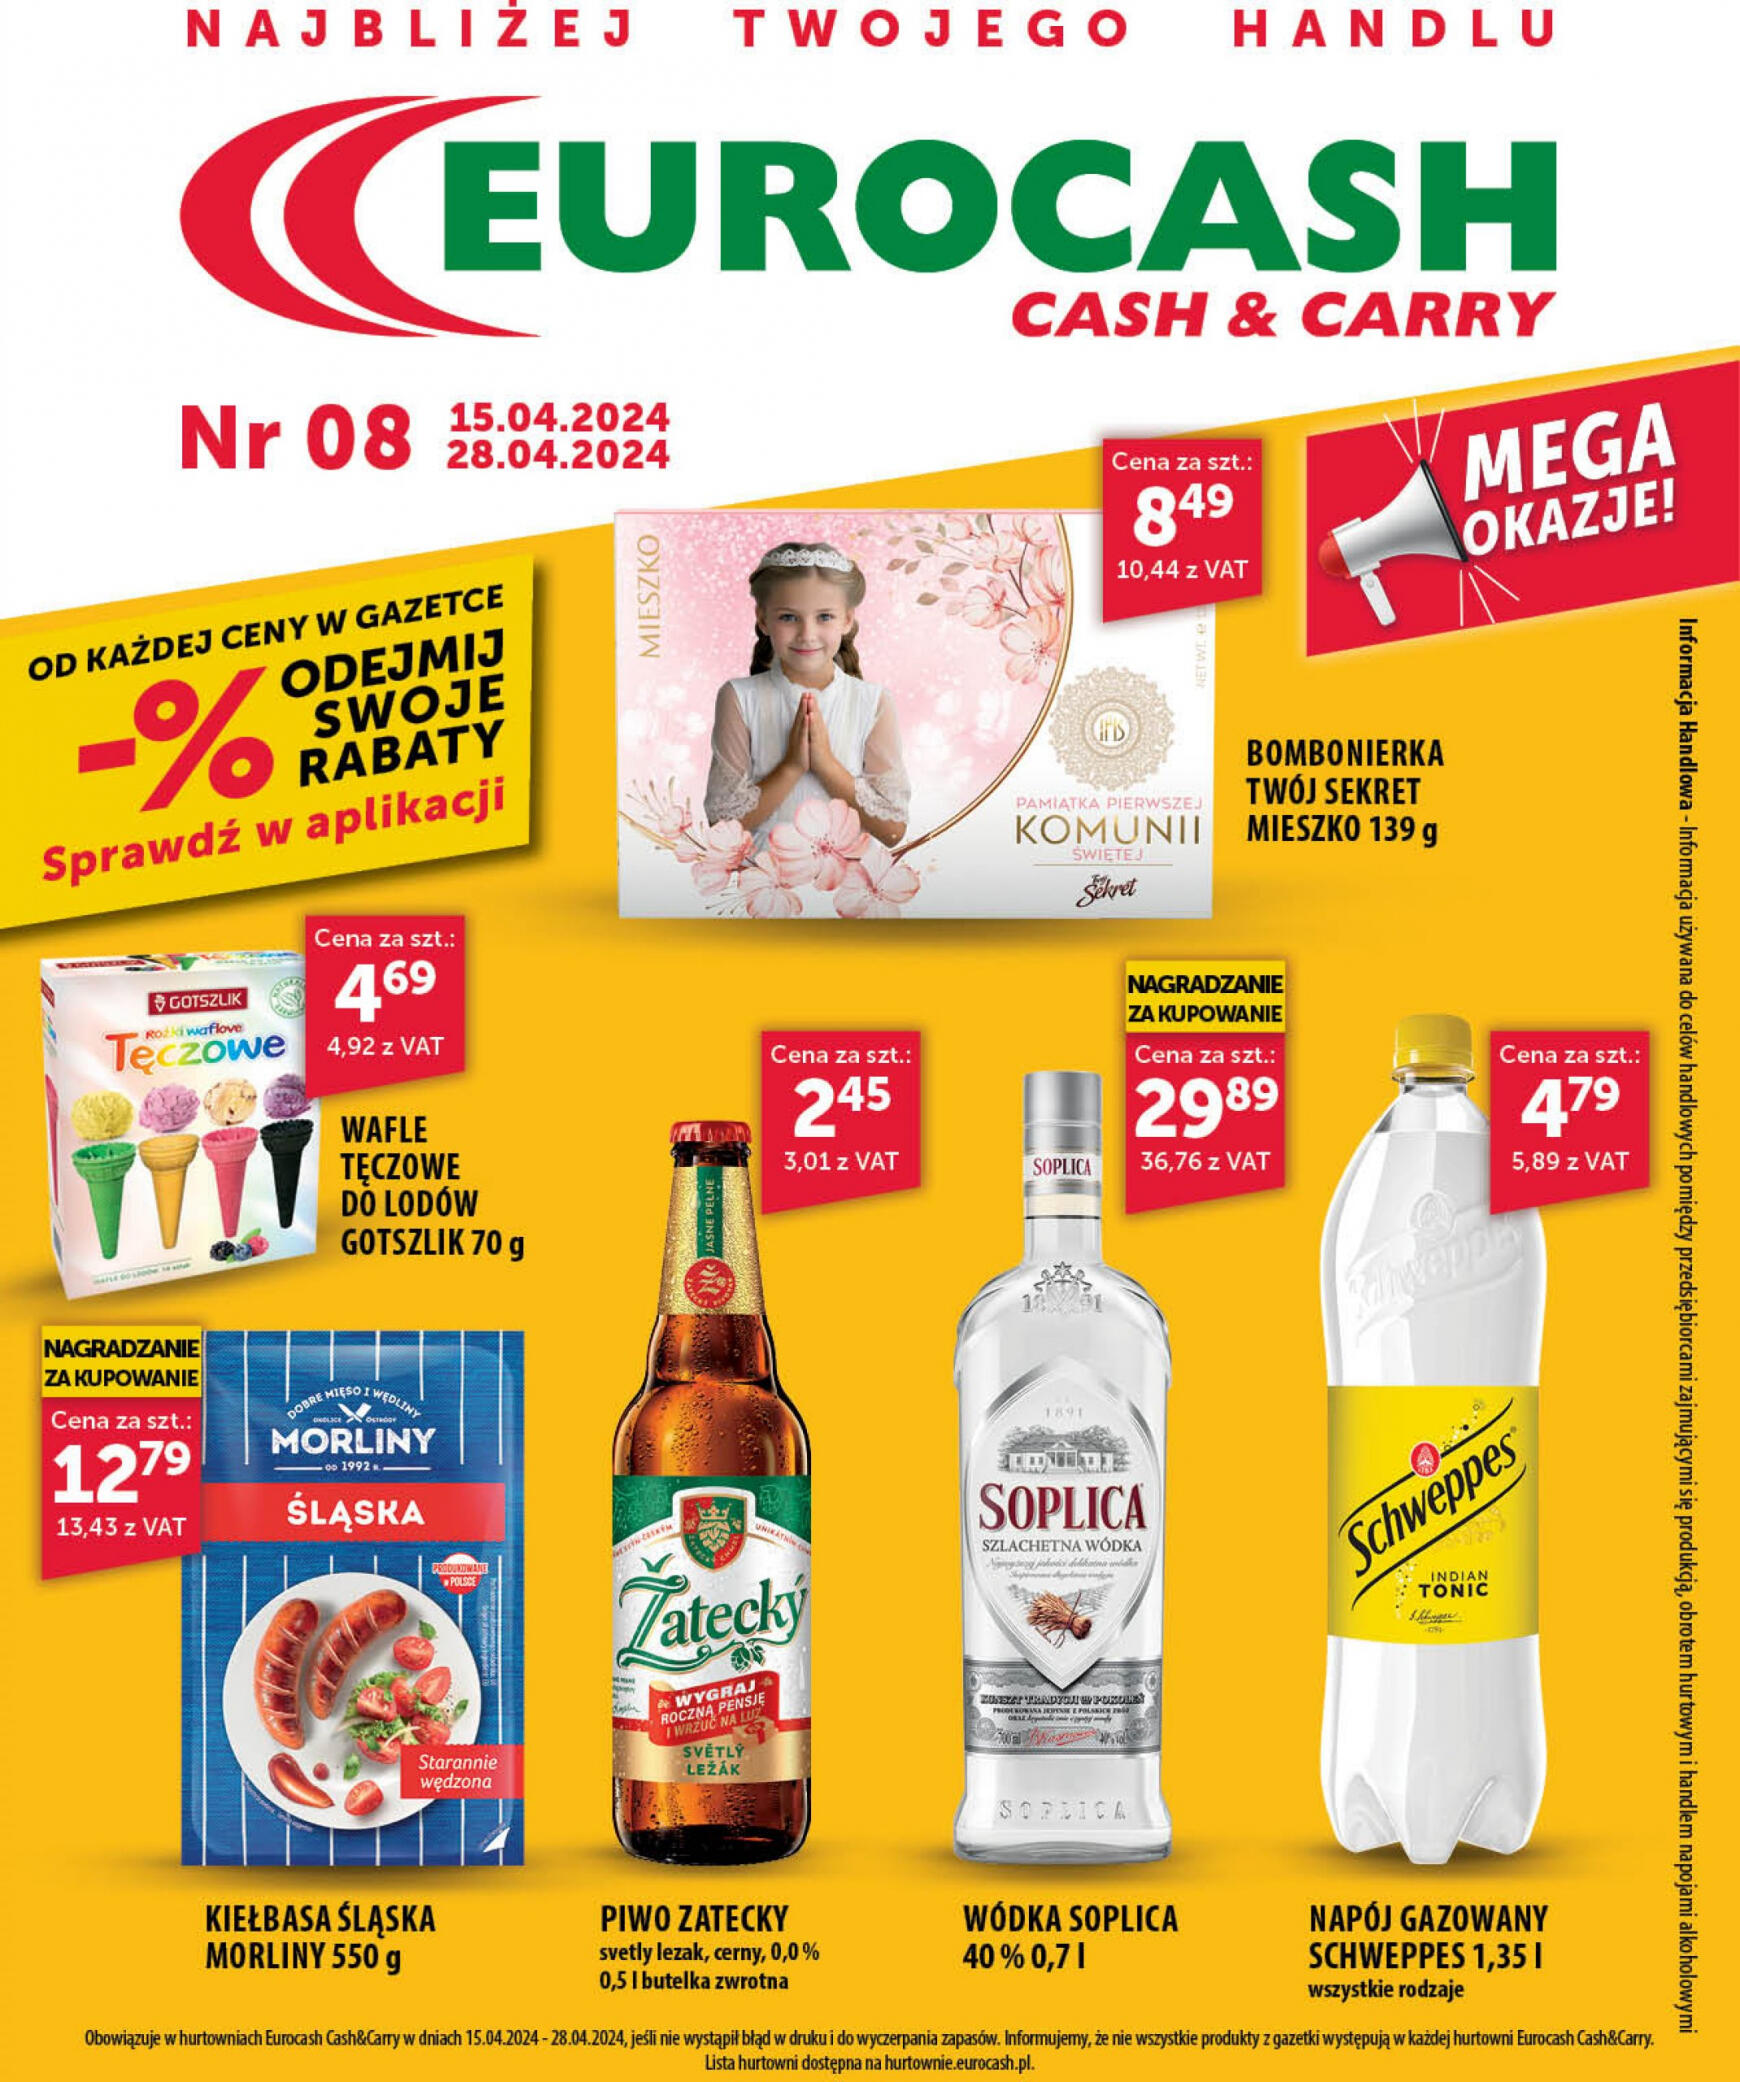 eurocash - Eurocash - Gazetka Cash&Carry gazetka aktualna ważna od 15.04. - 28.04. - page: 1